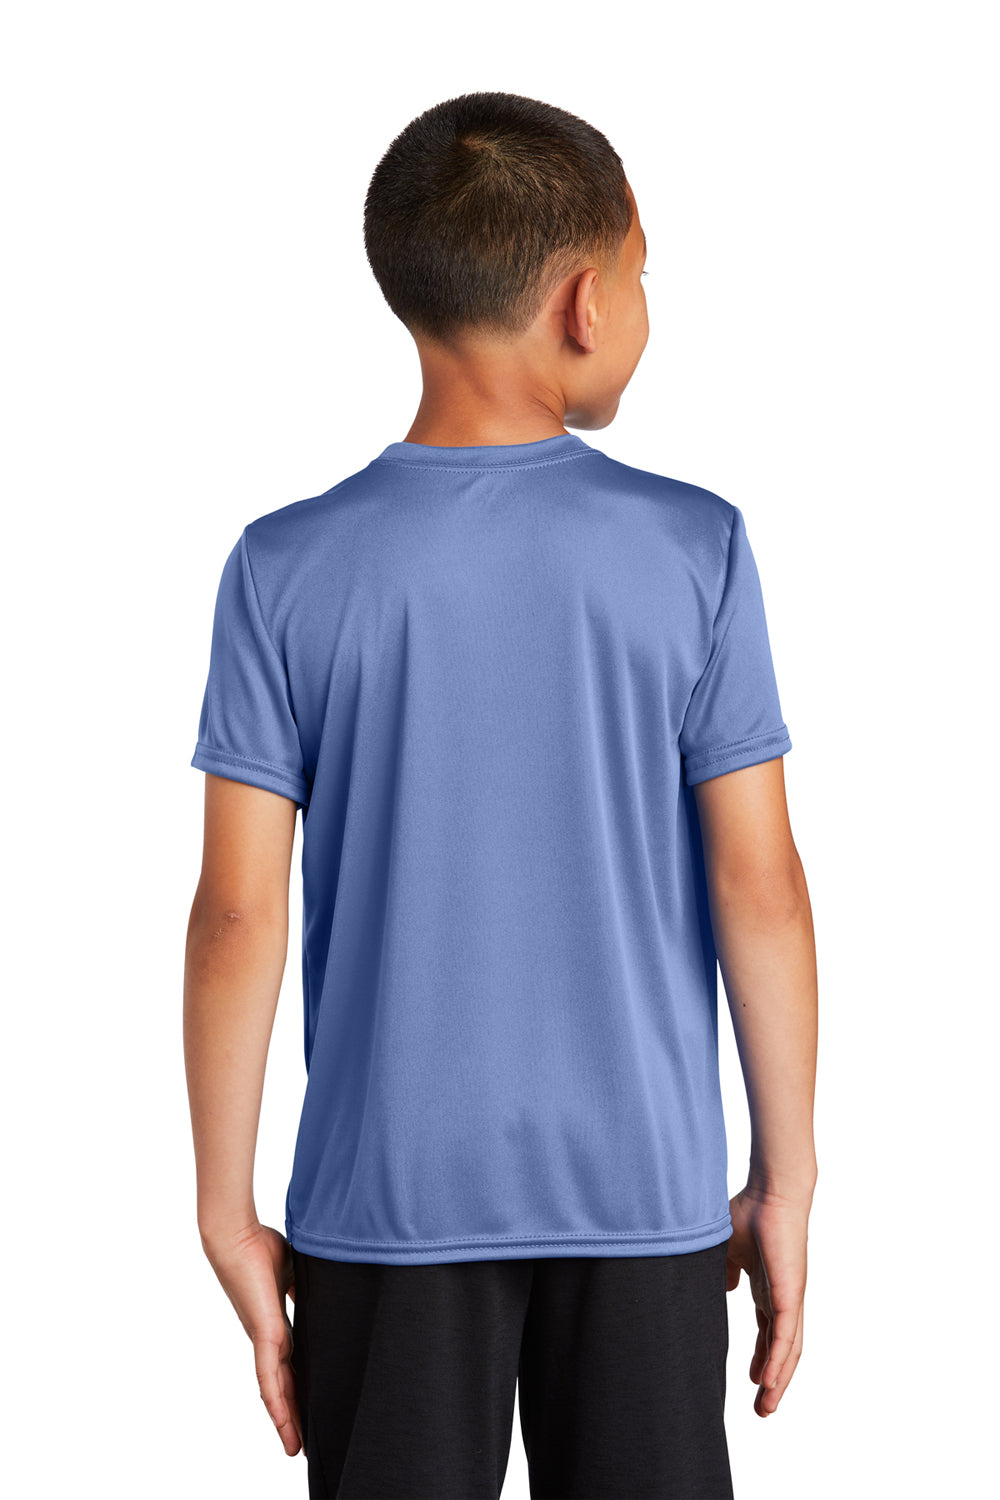 Port & Company PC380Y Youth Dry Zone Performance Moisture Wicking Short Sleeve Crewneck T-Shirt Carolina Blue Back